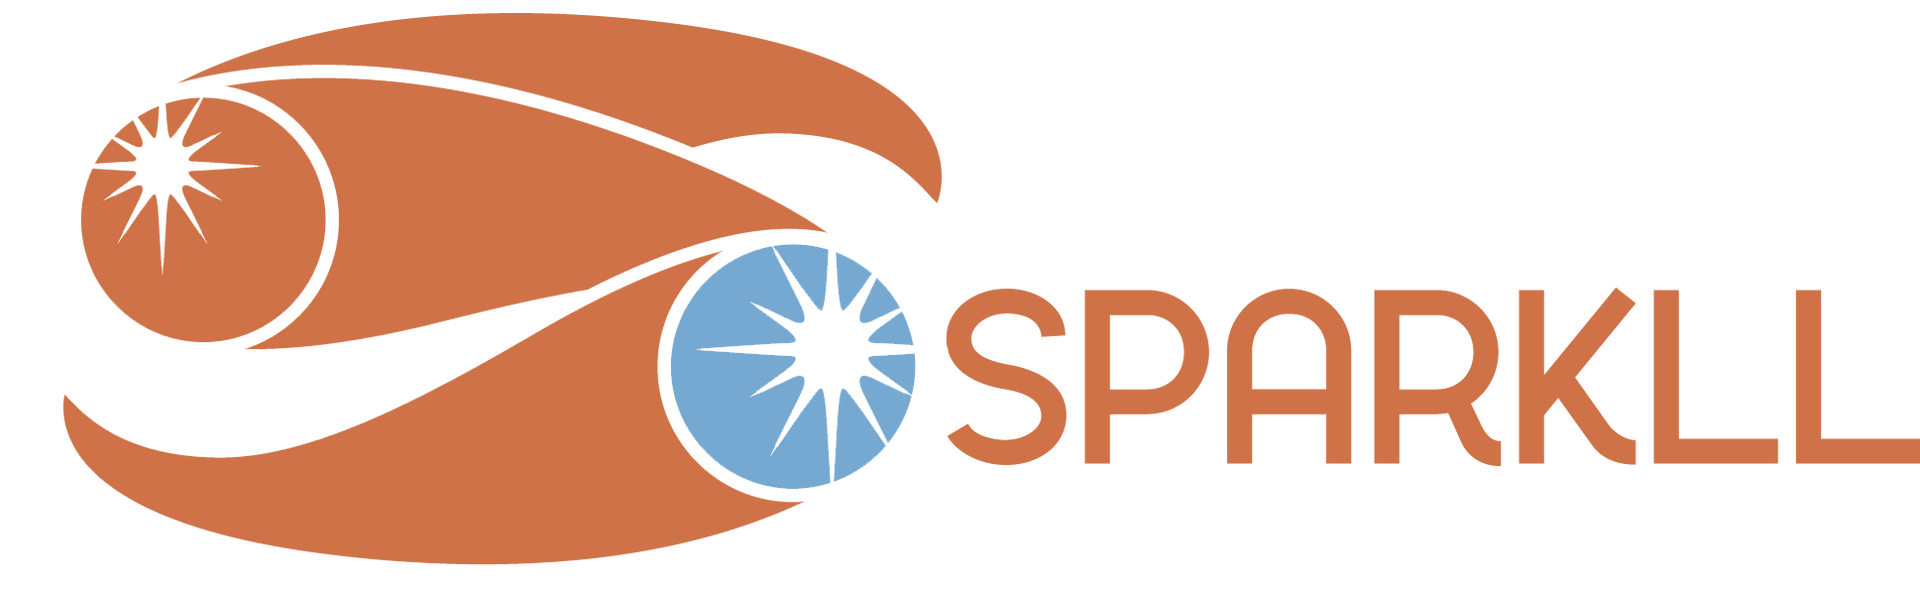 sparkll logo